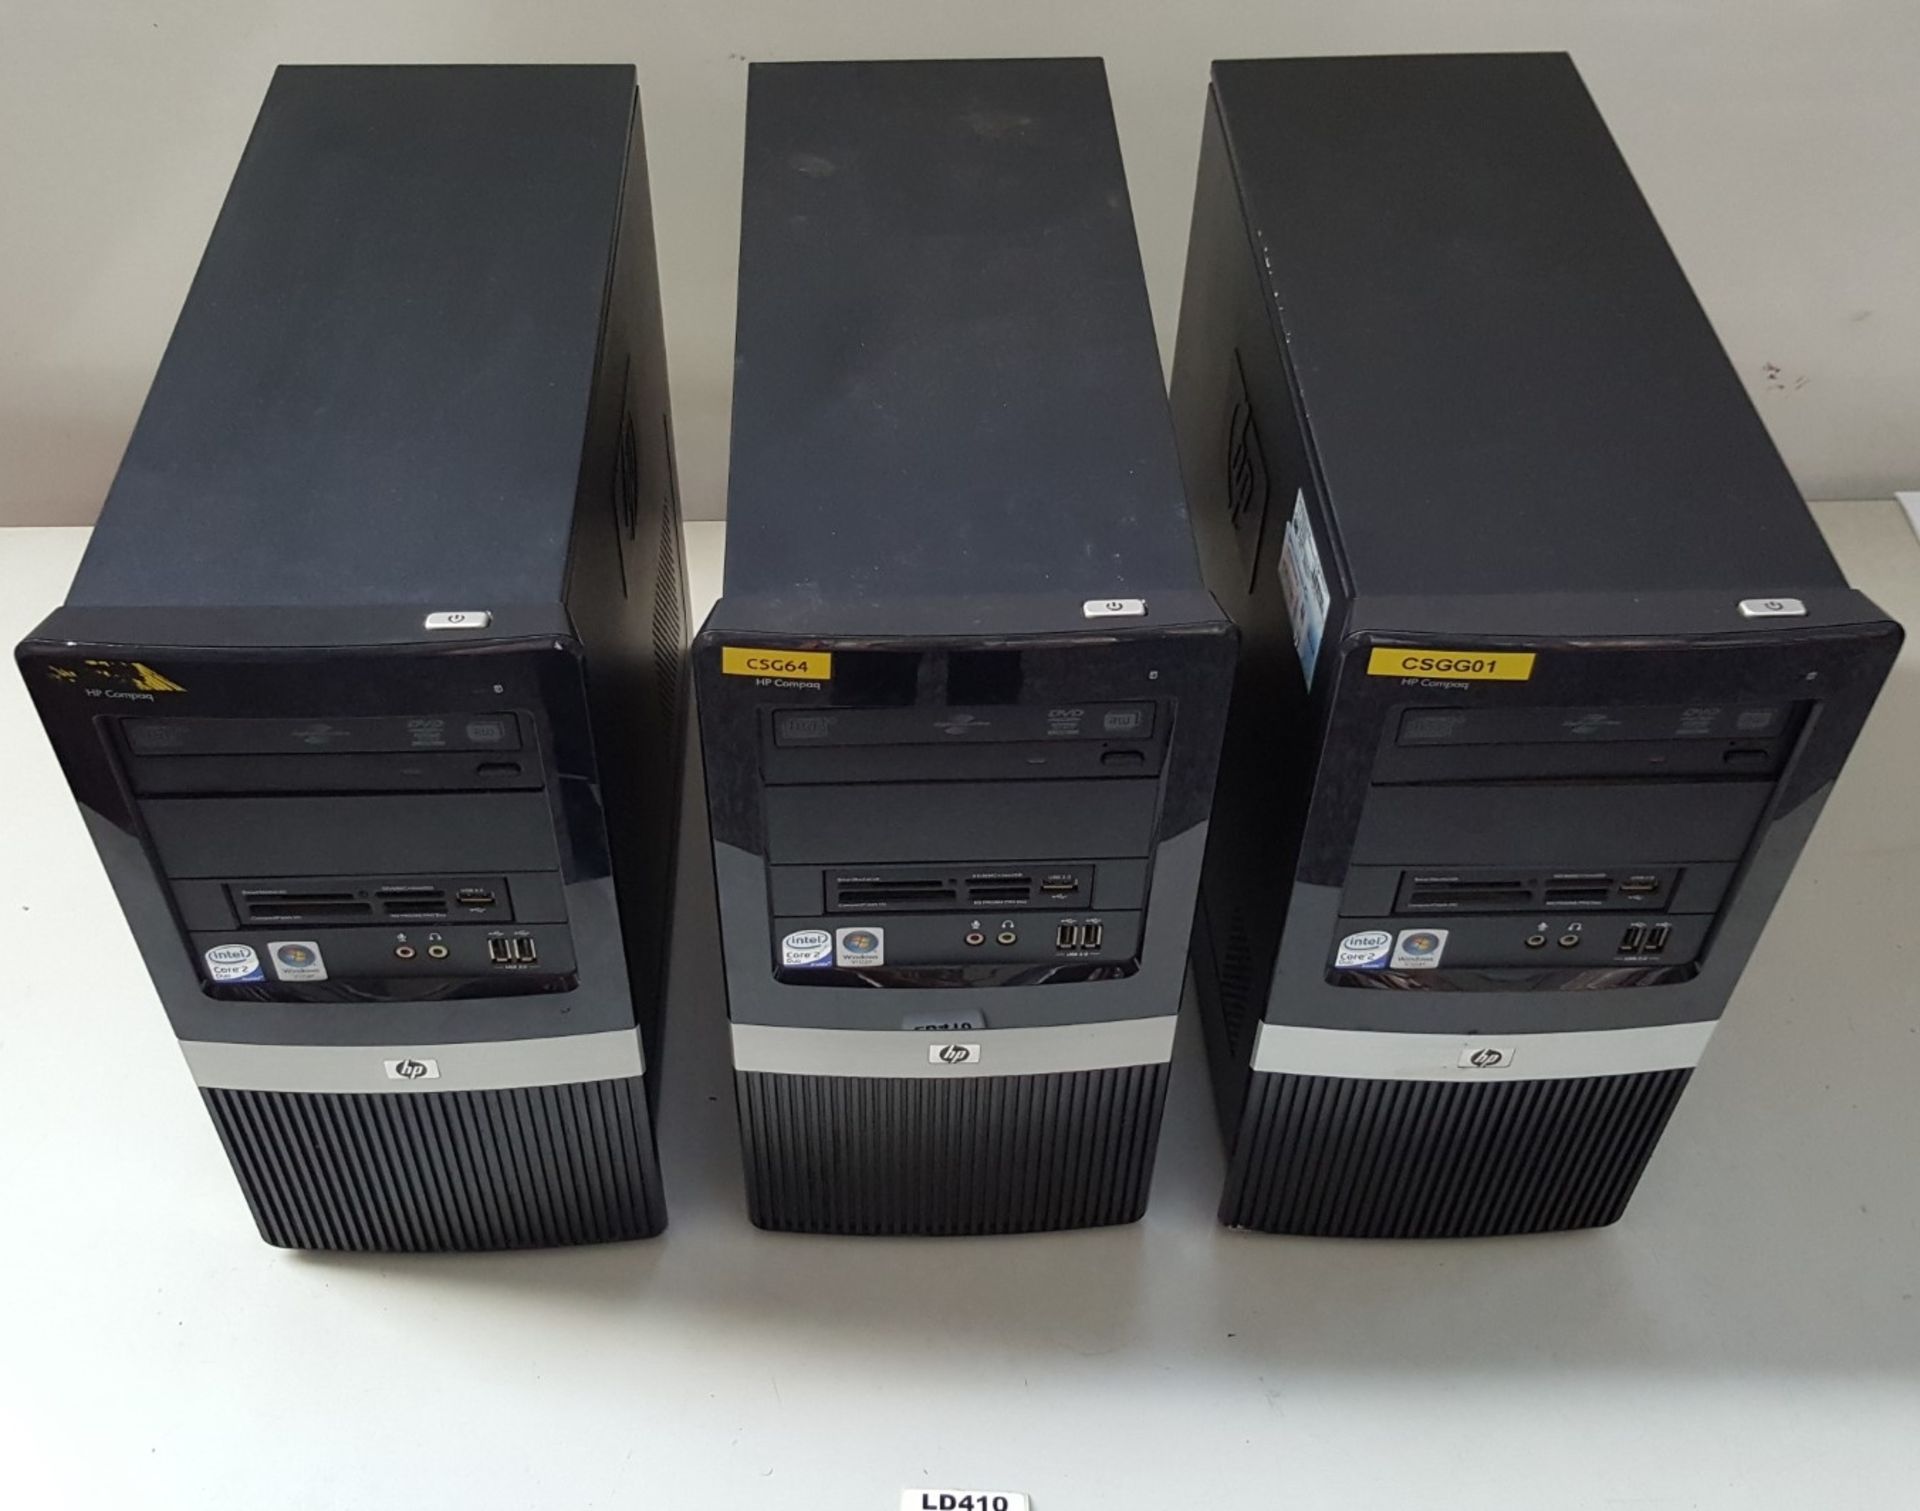 3 x HP Compaq DX2400 Desktop PC Intel Core 2 Duo 3 GHz 2GB RAM - Ref LD410 - Image 3 of 4